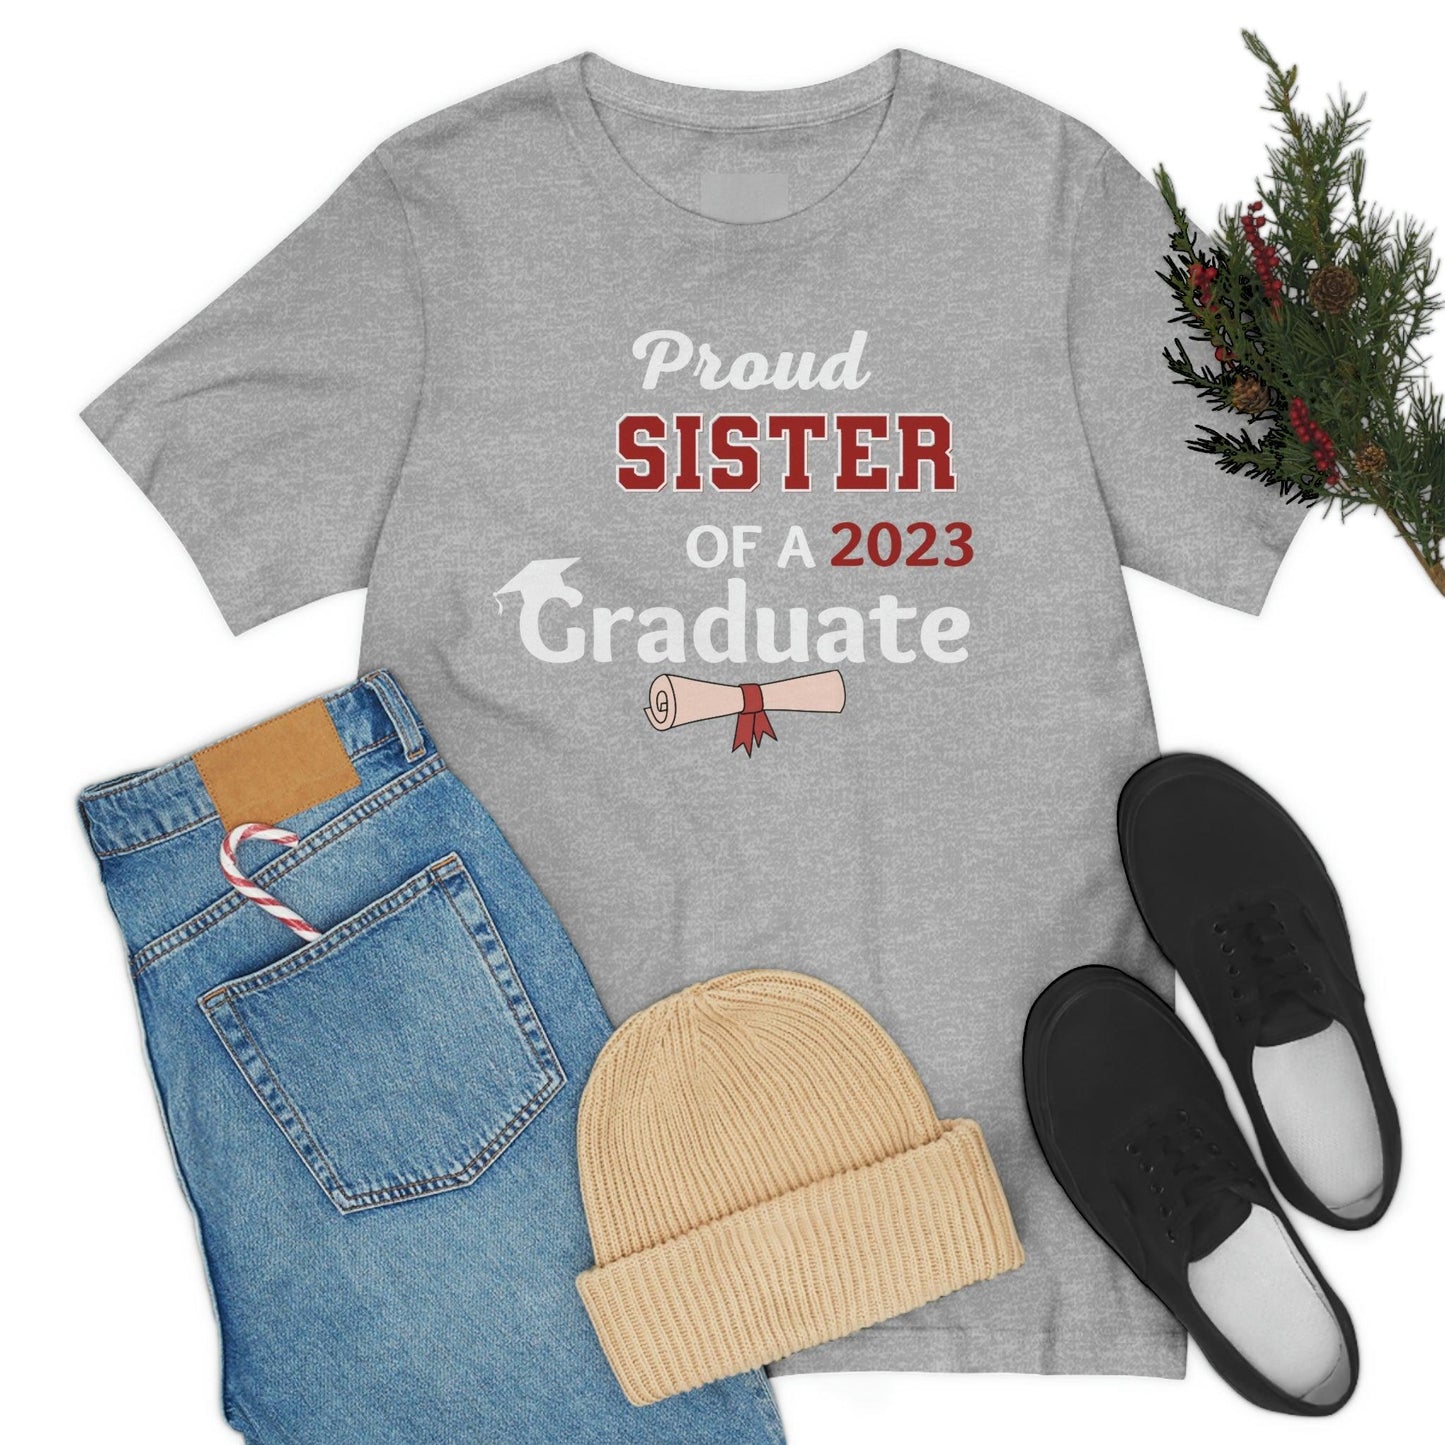 Proud Sister of a Graduate shirt - Graduation shirt - Graduation gift - Giftsmojo